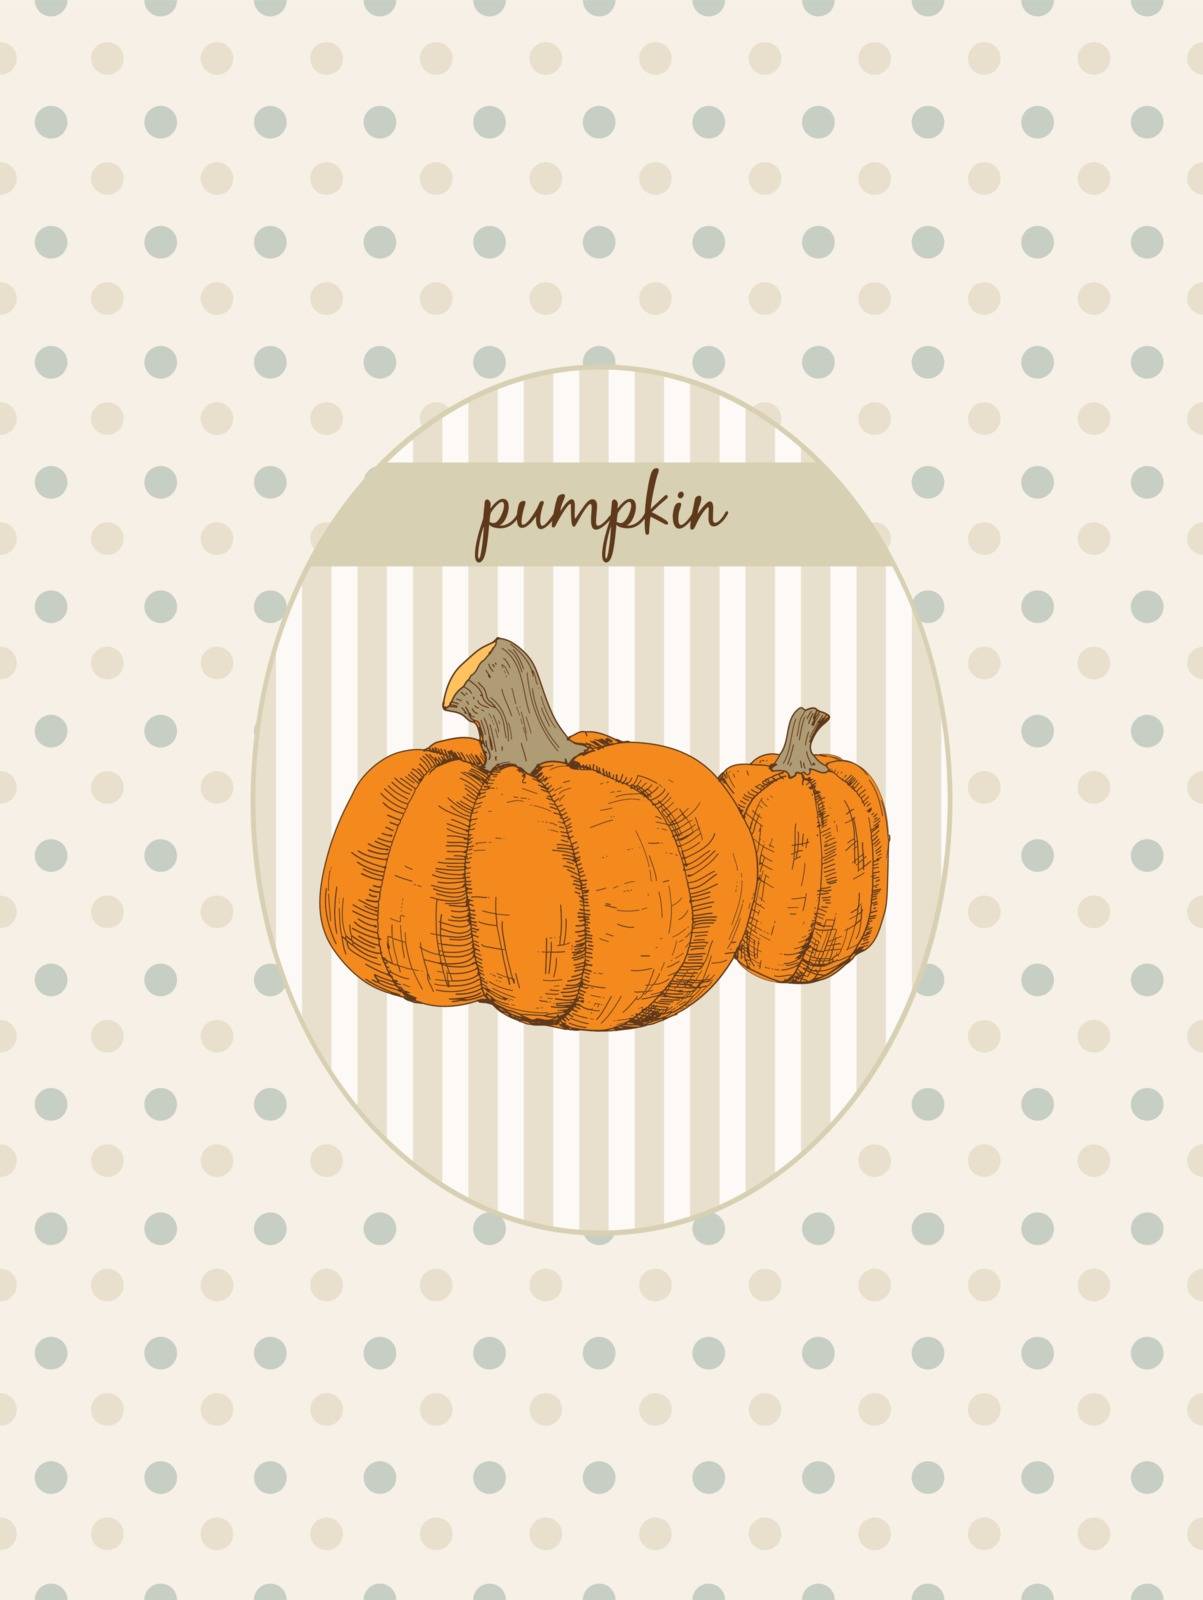 Pumpkin. Hand drawn graphic illustration at medallion